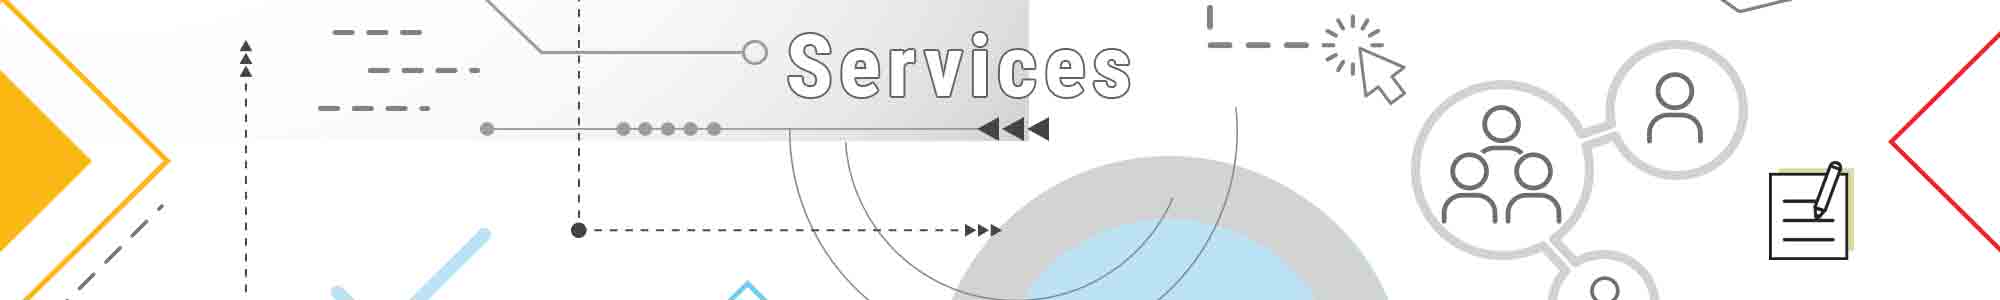 e-services image